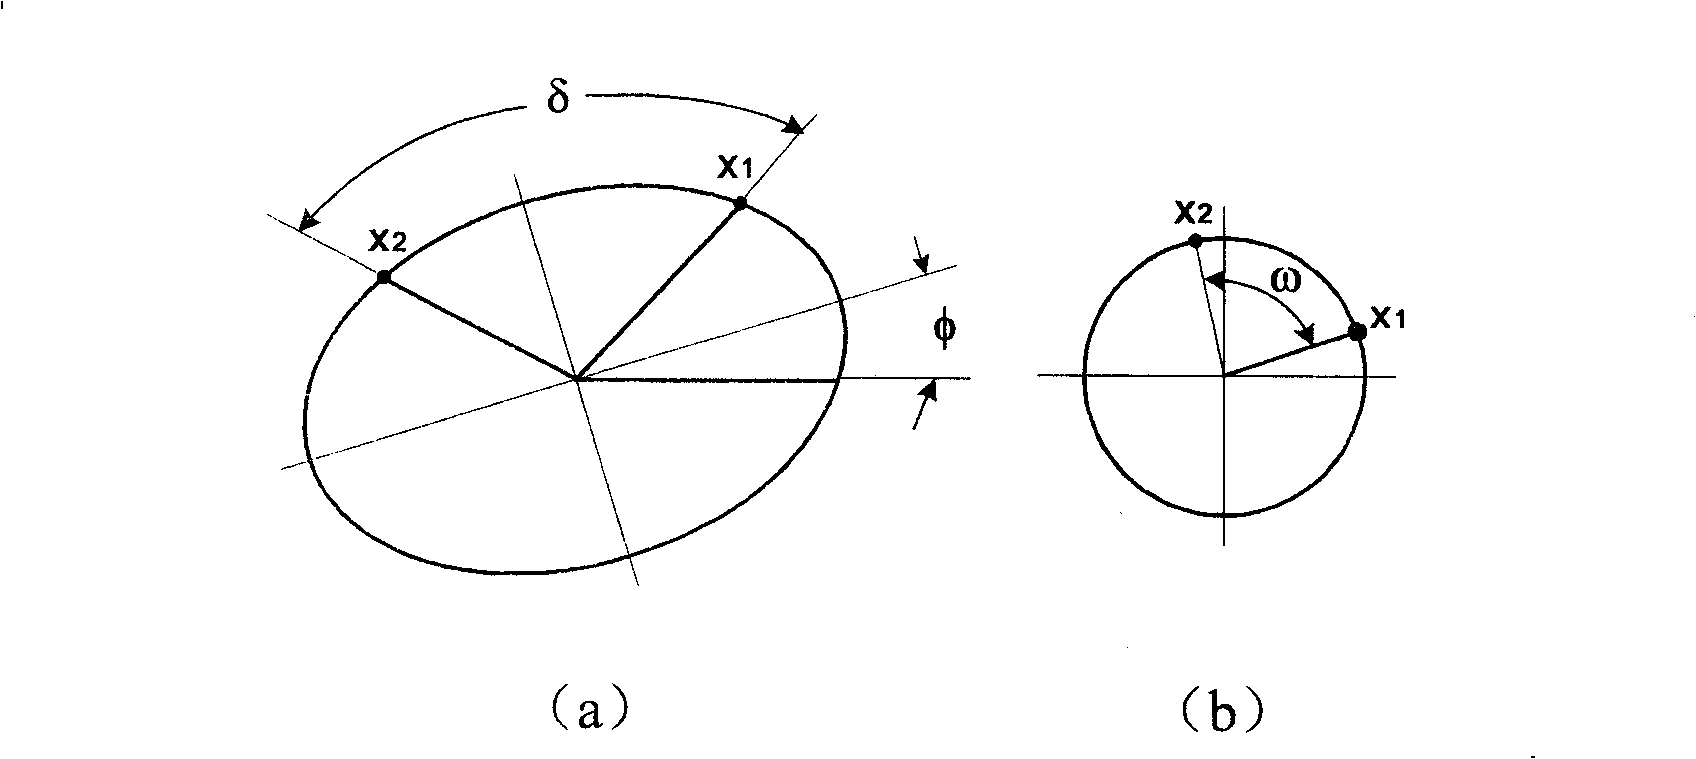 Flexible rotor holographic dynamic balancing method based on empirical mode decomposition